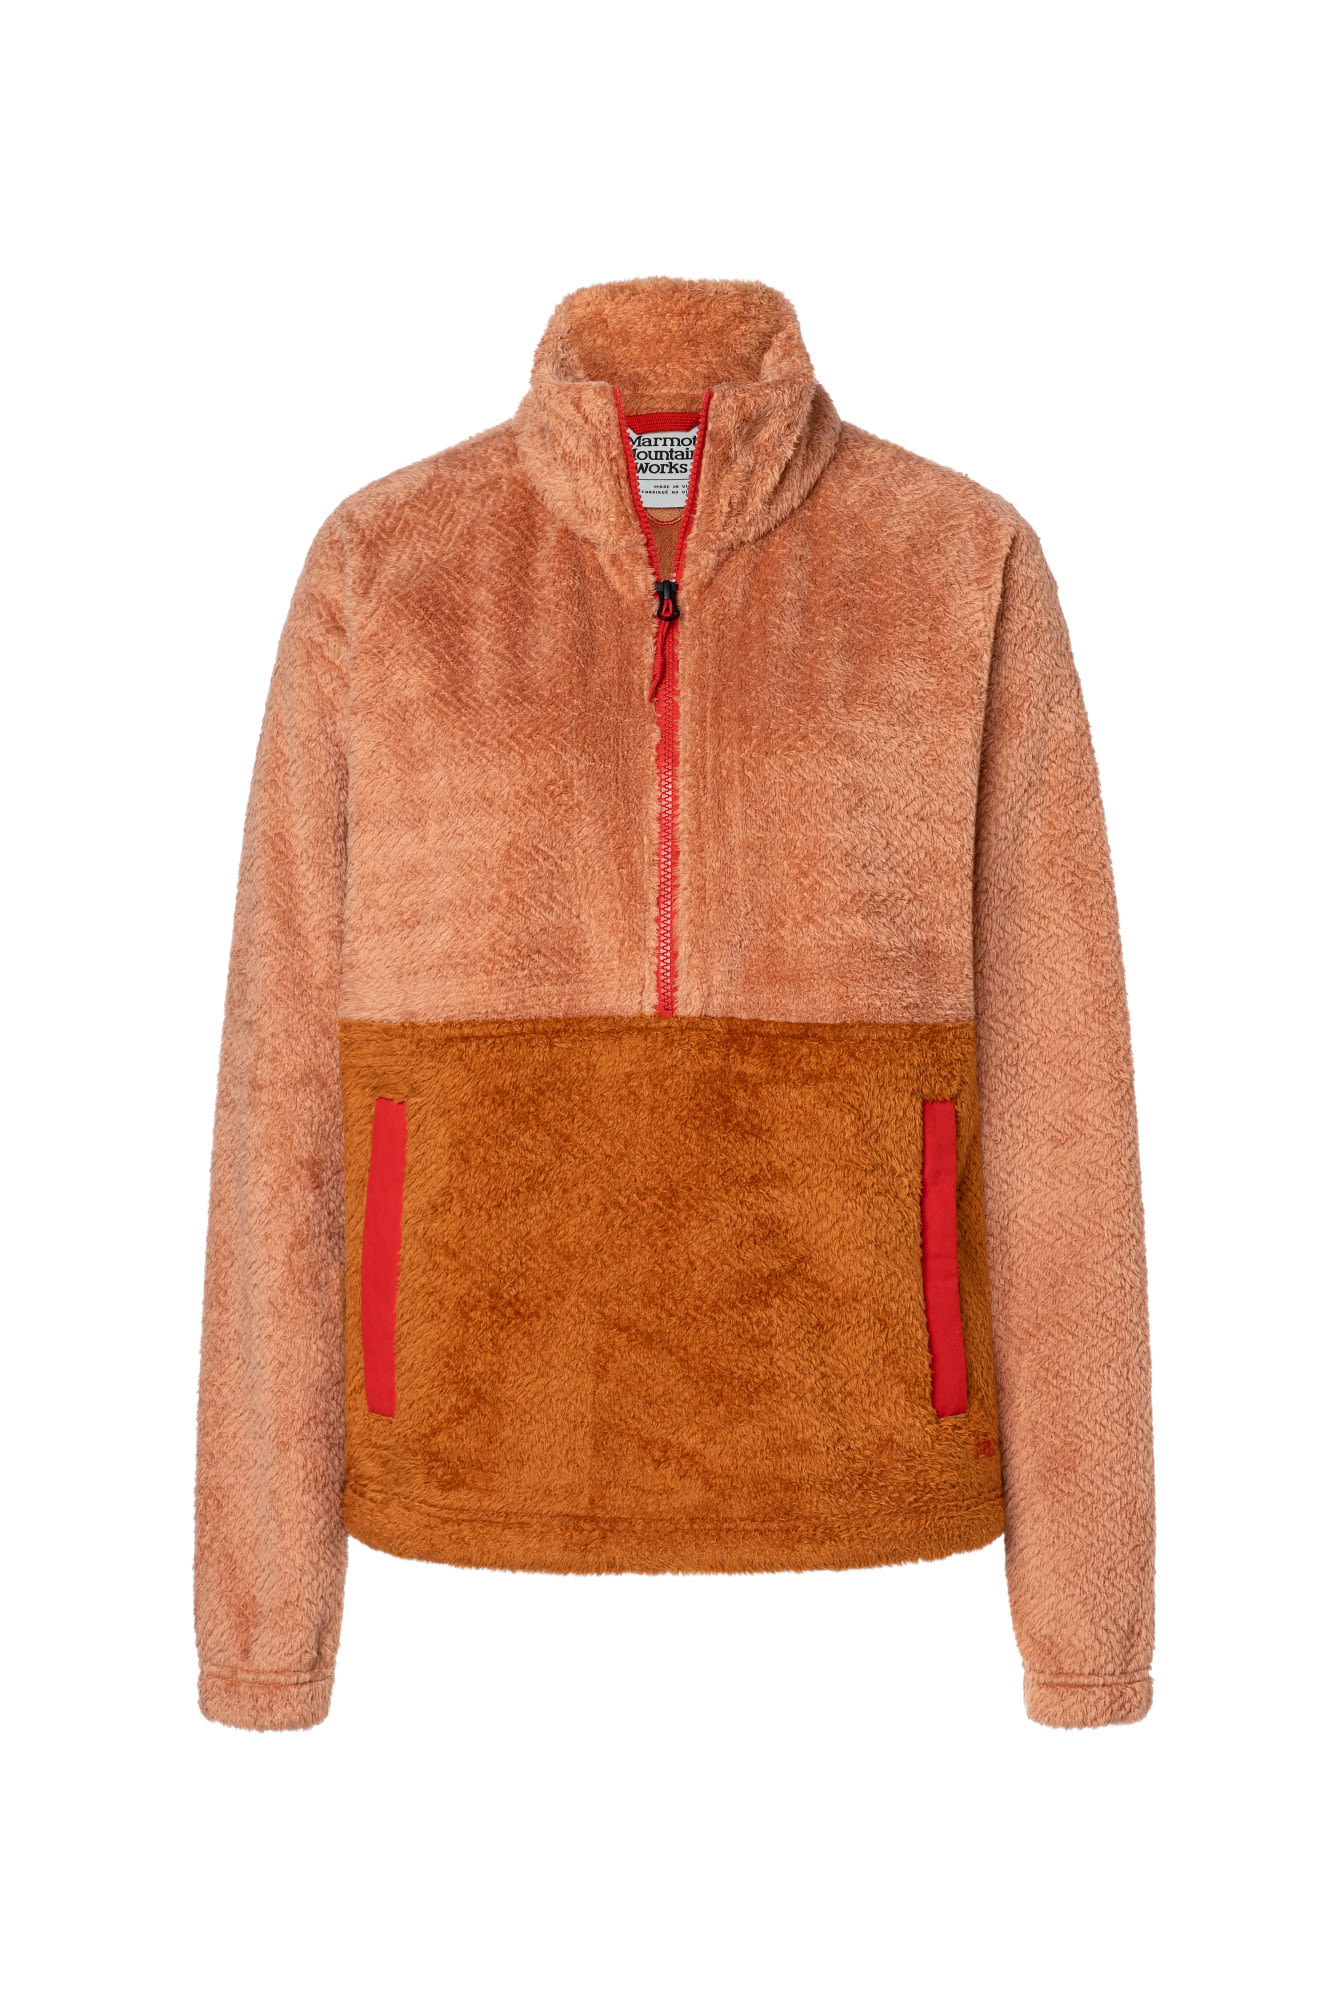 Marmot Homestead Fleece 1-2 Zip Colorblock - Braun- Female Fleece- und Powerstretch-Pullover- Grsse S - Farbe Rose Gold - Copper